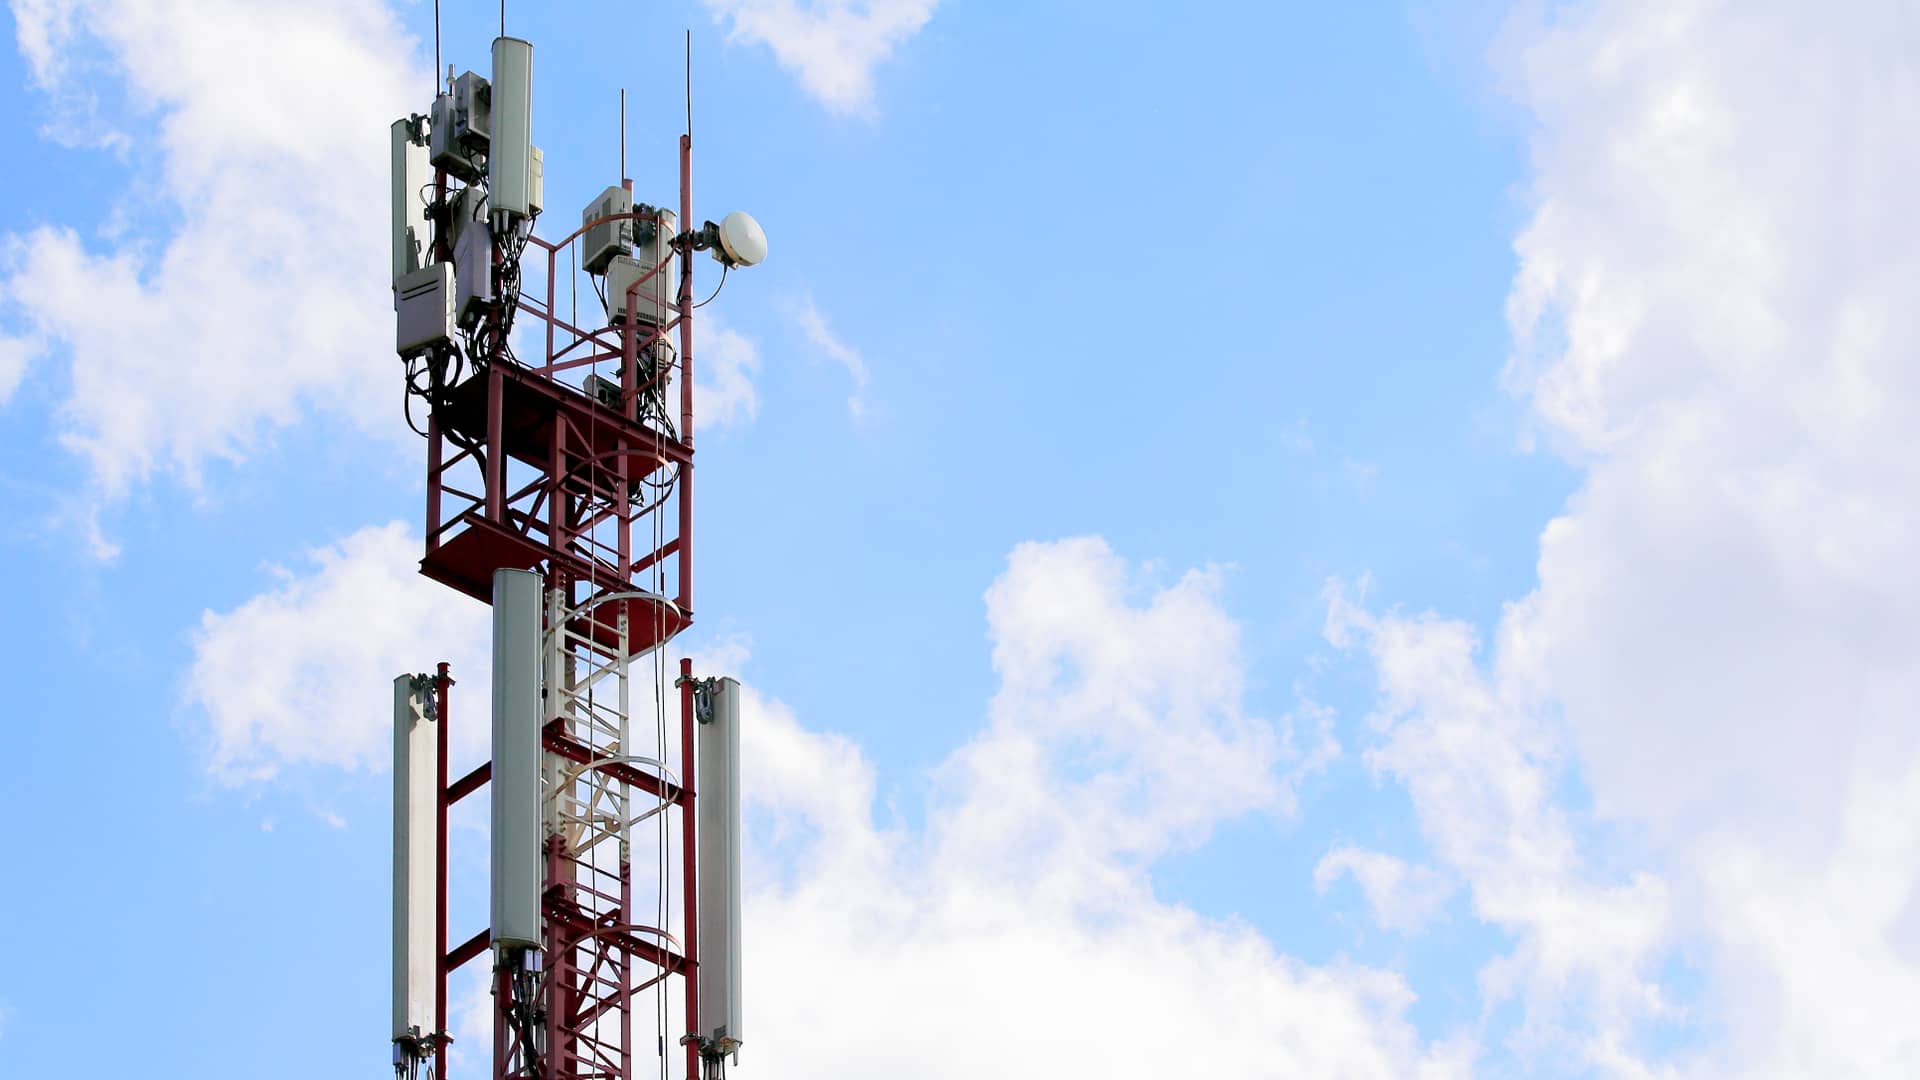 Antena de telecomunicaciones de redes celulares sobre cielo azul, simboliza la cobertura de telnor